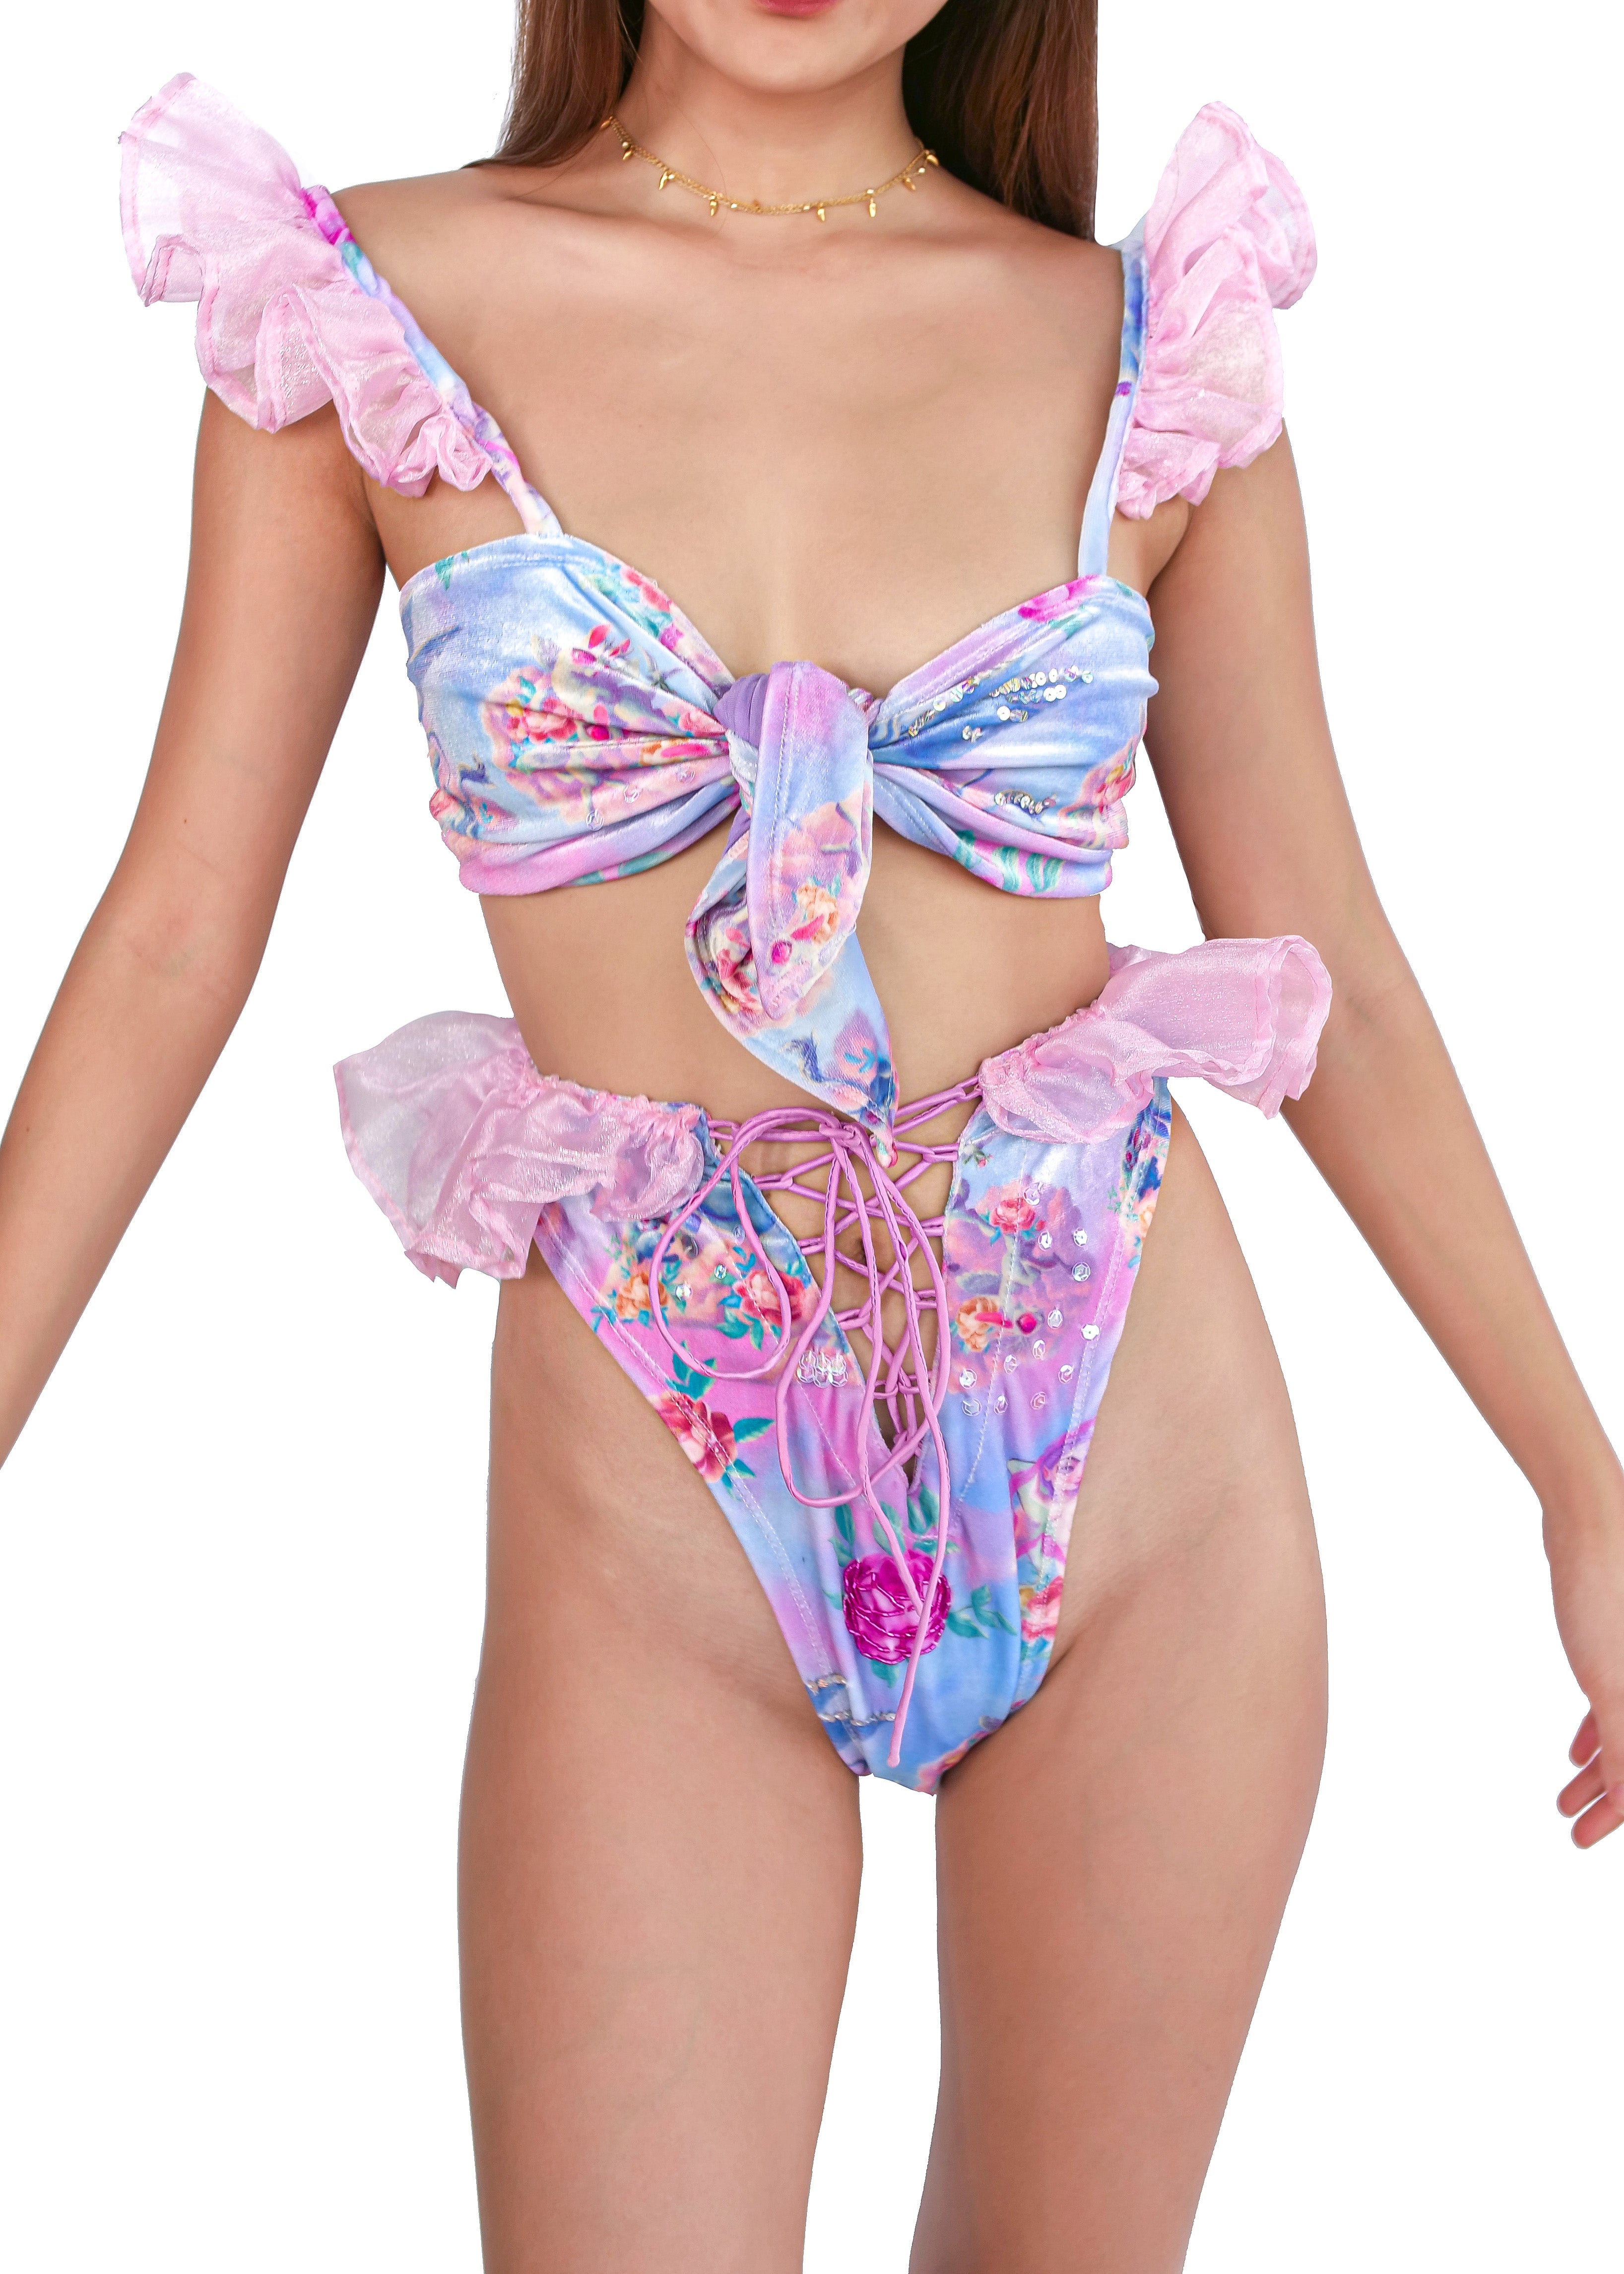 The Mimpi Fairy Ruffle Bikini Bottoms